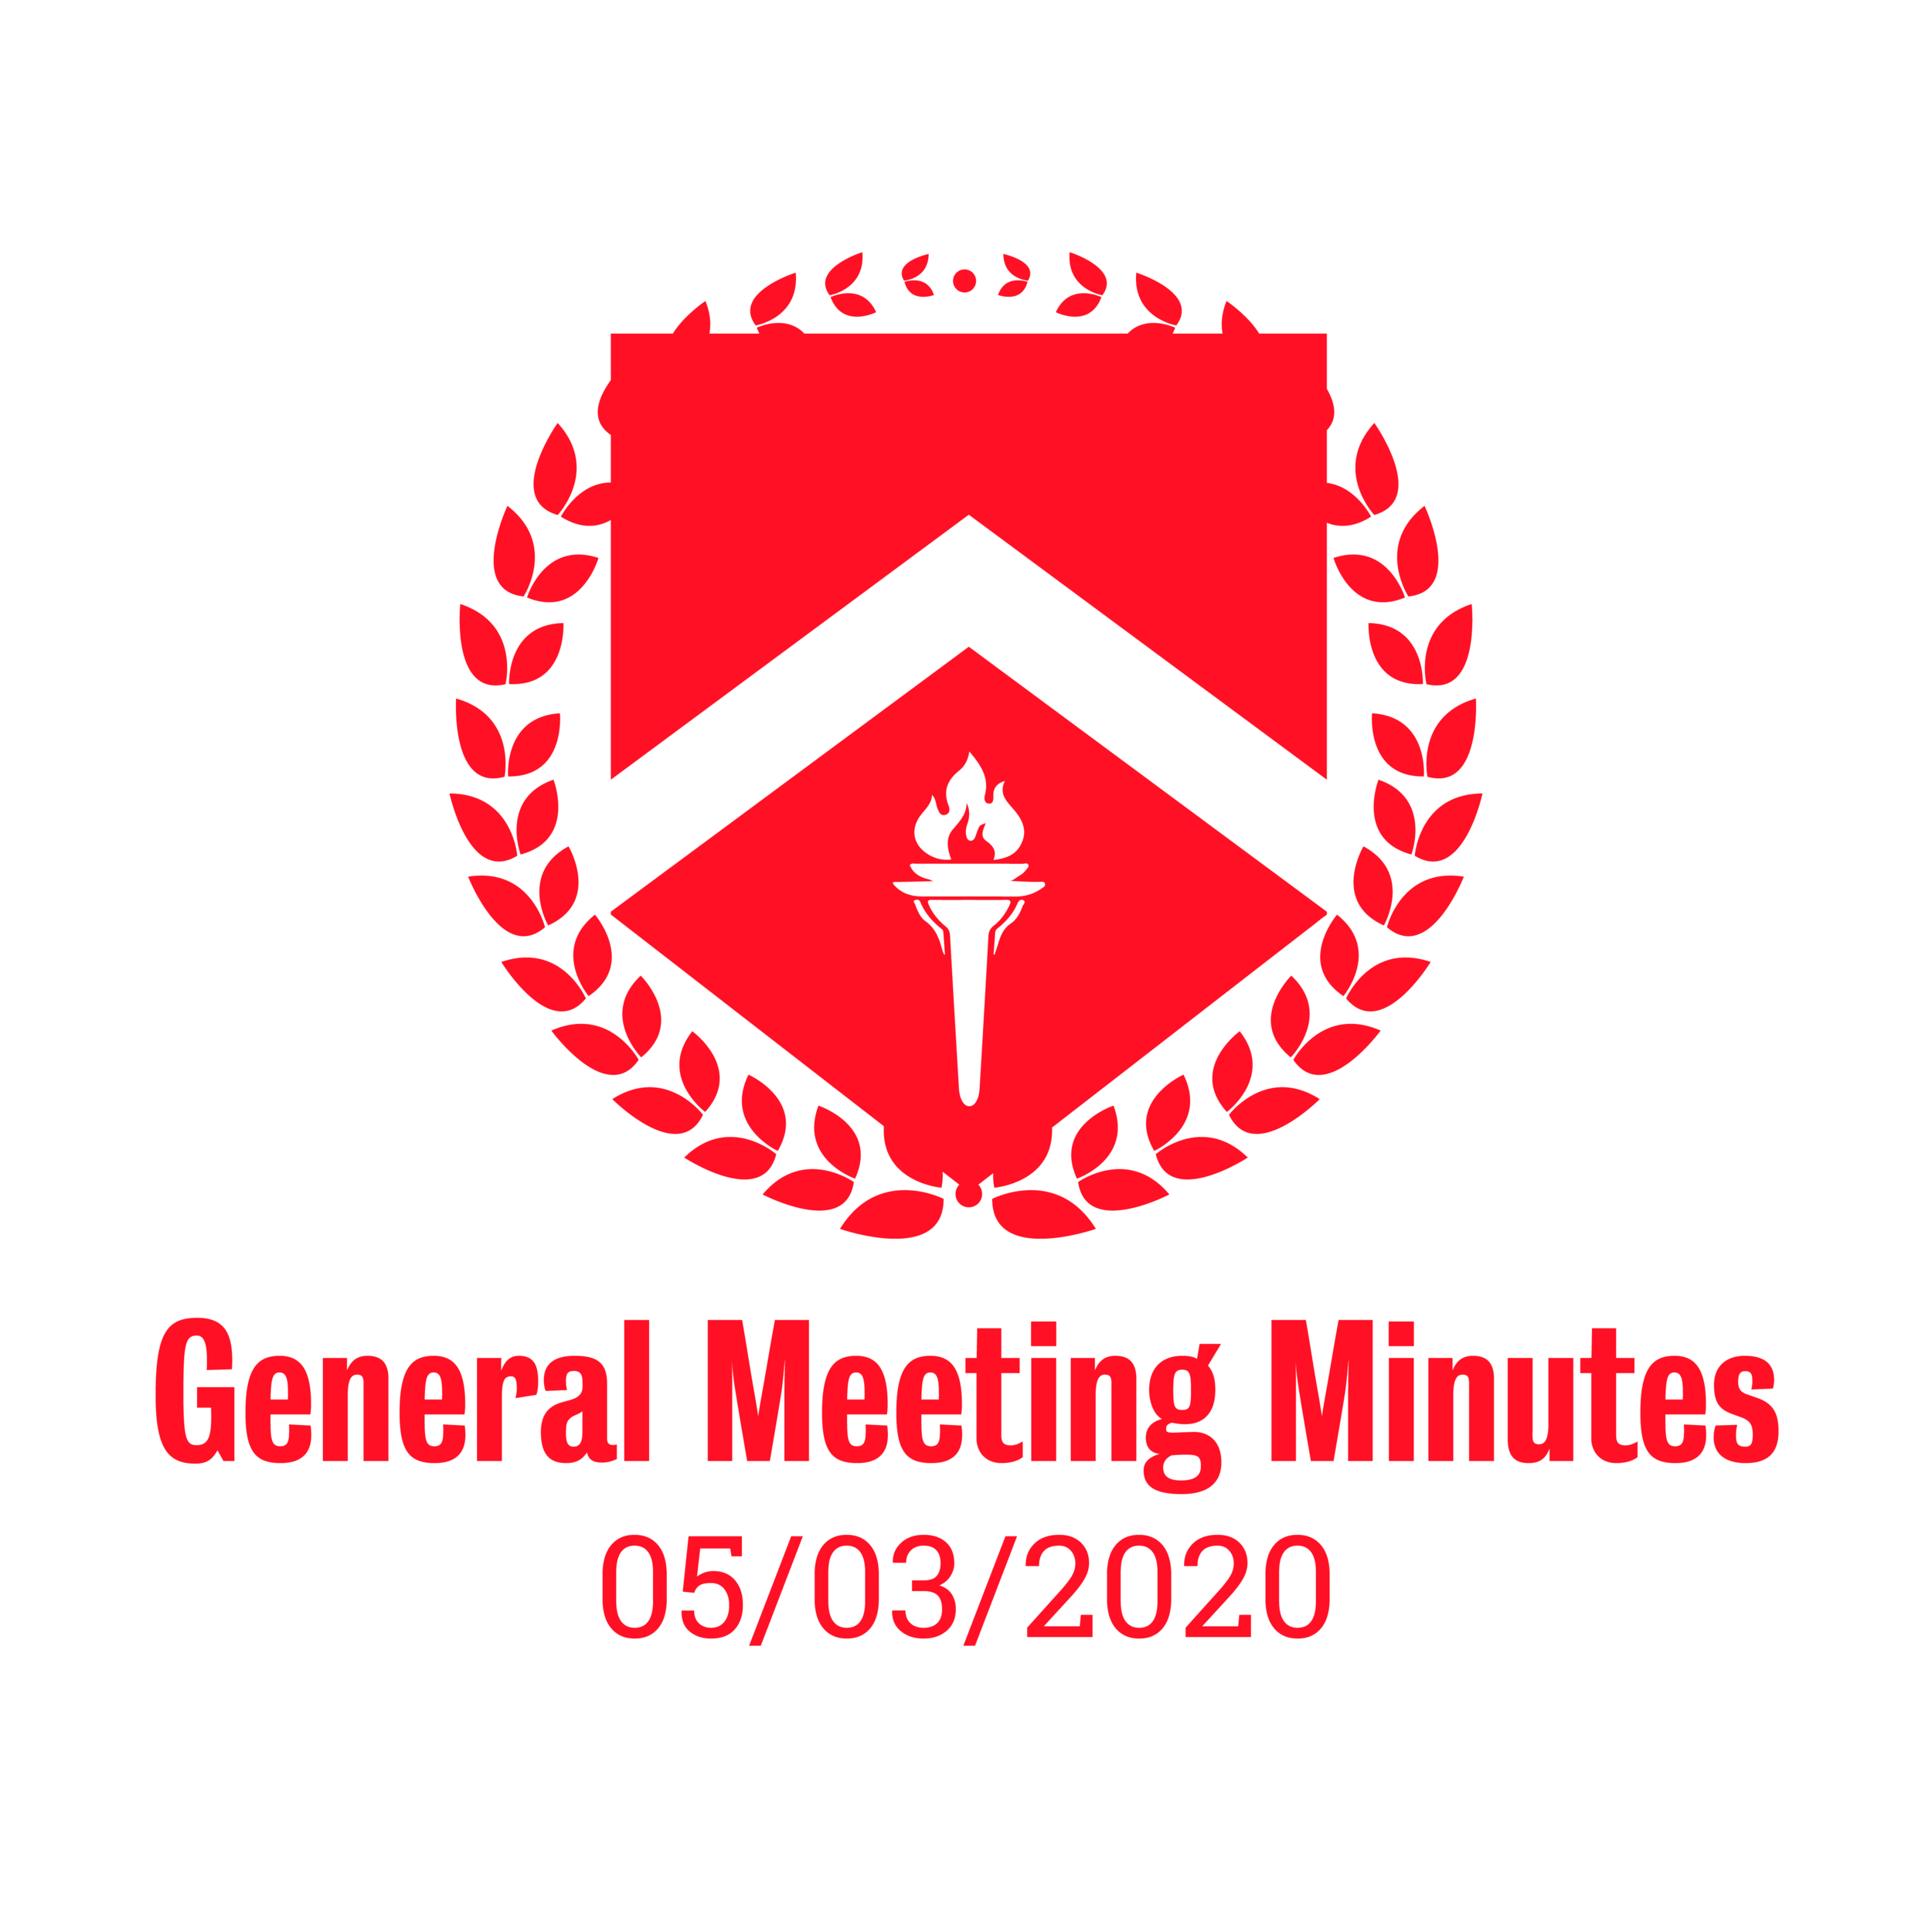 General Meeting Minutes 05/03/2020